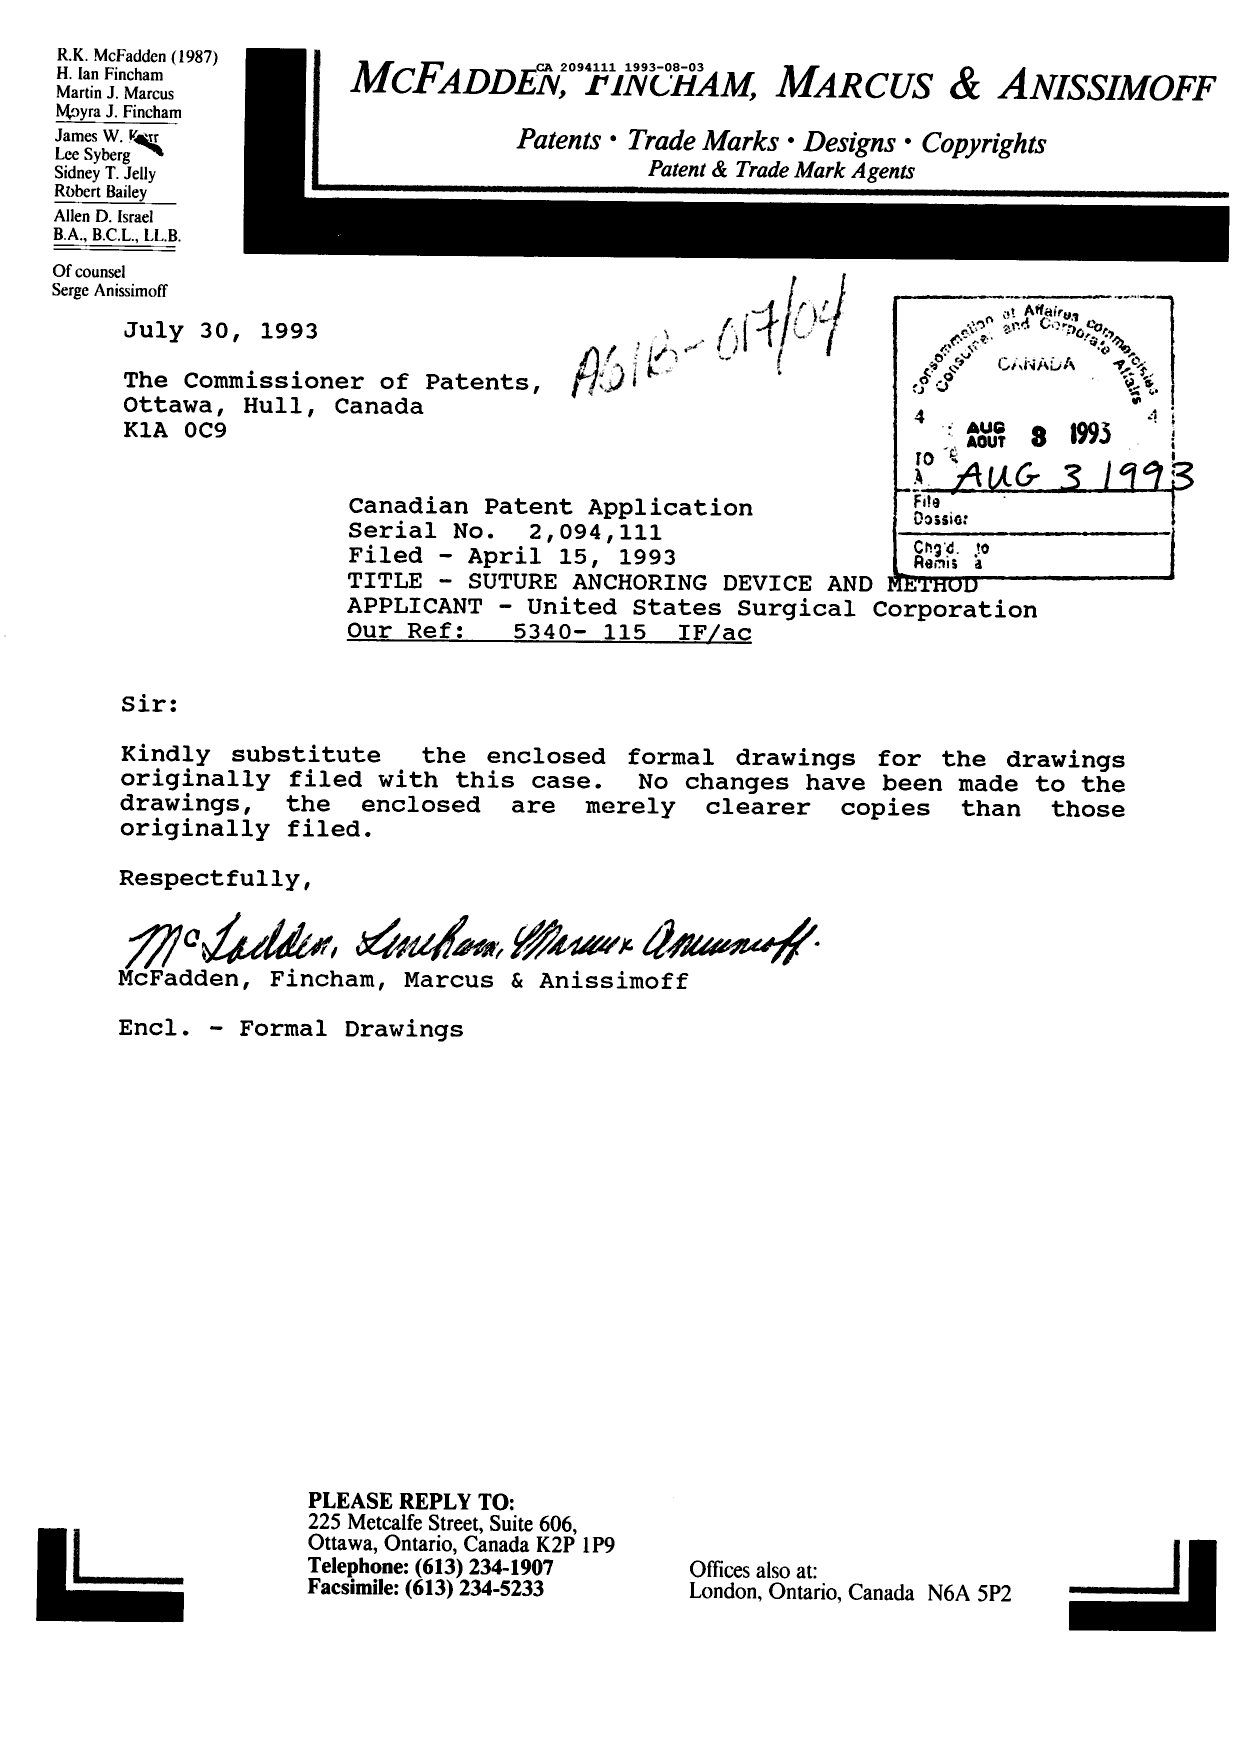 Canadian Patent Document 2094111. Prosecution Correspondence 19930803. Image 1 of 1